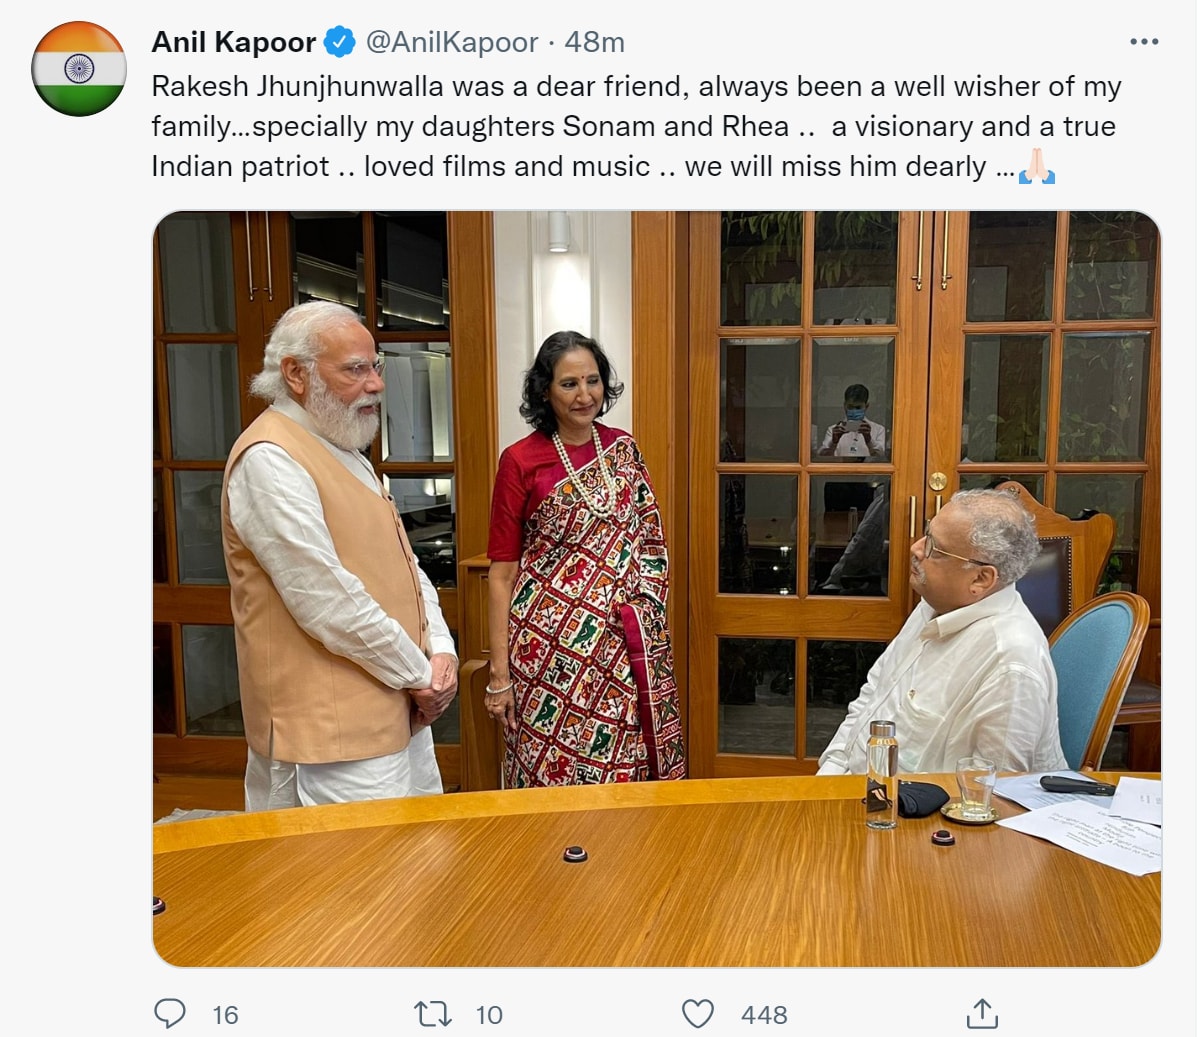 Anil Kapoor's tweet.